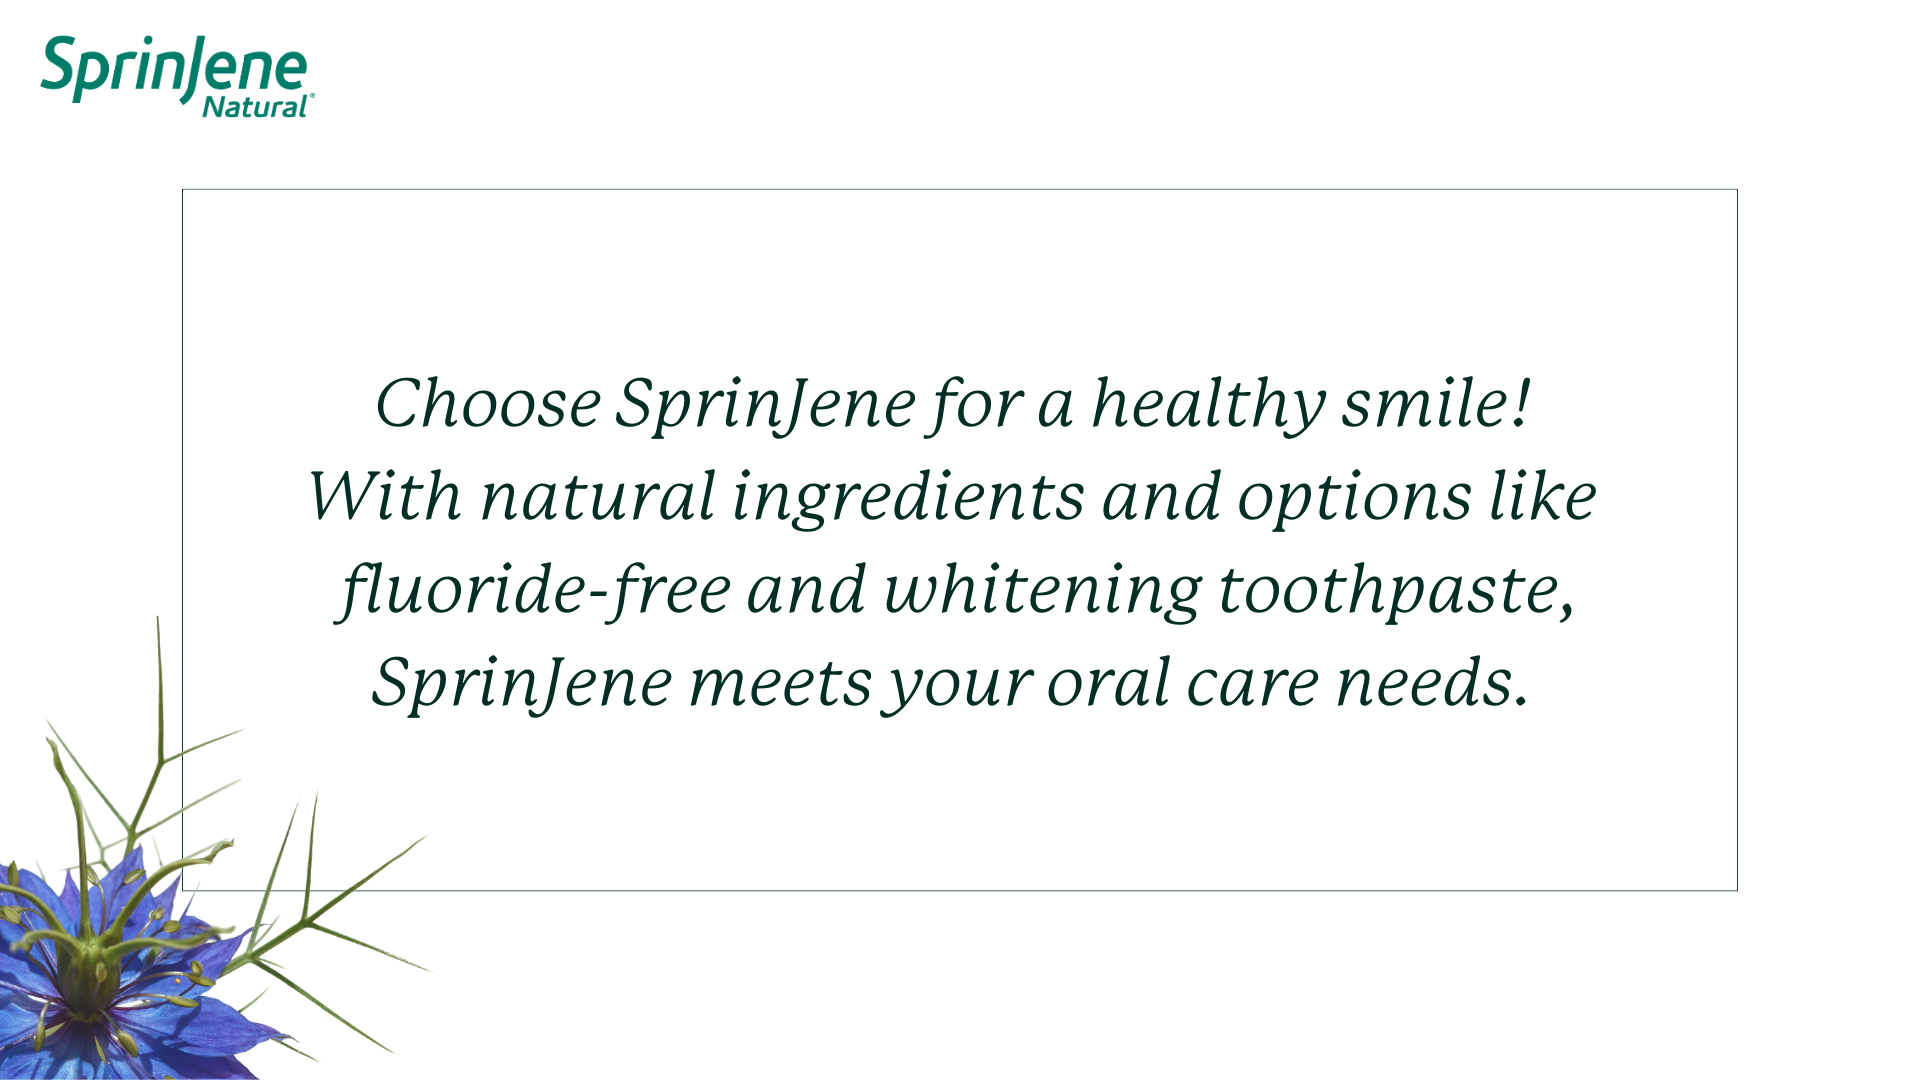 SprinJene Natural Toothpaste